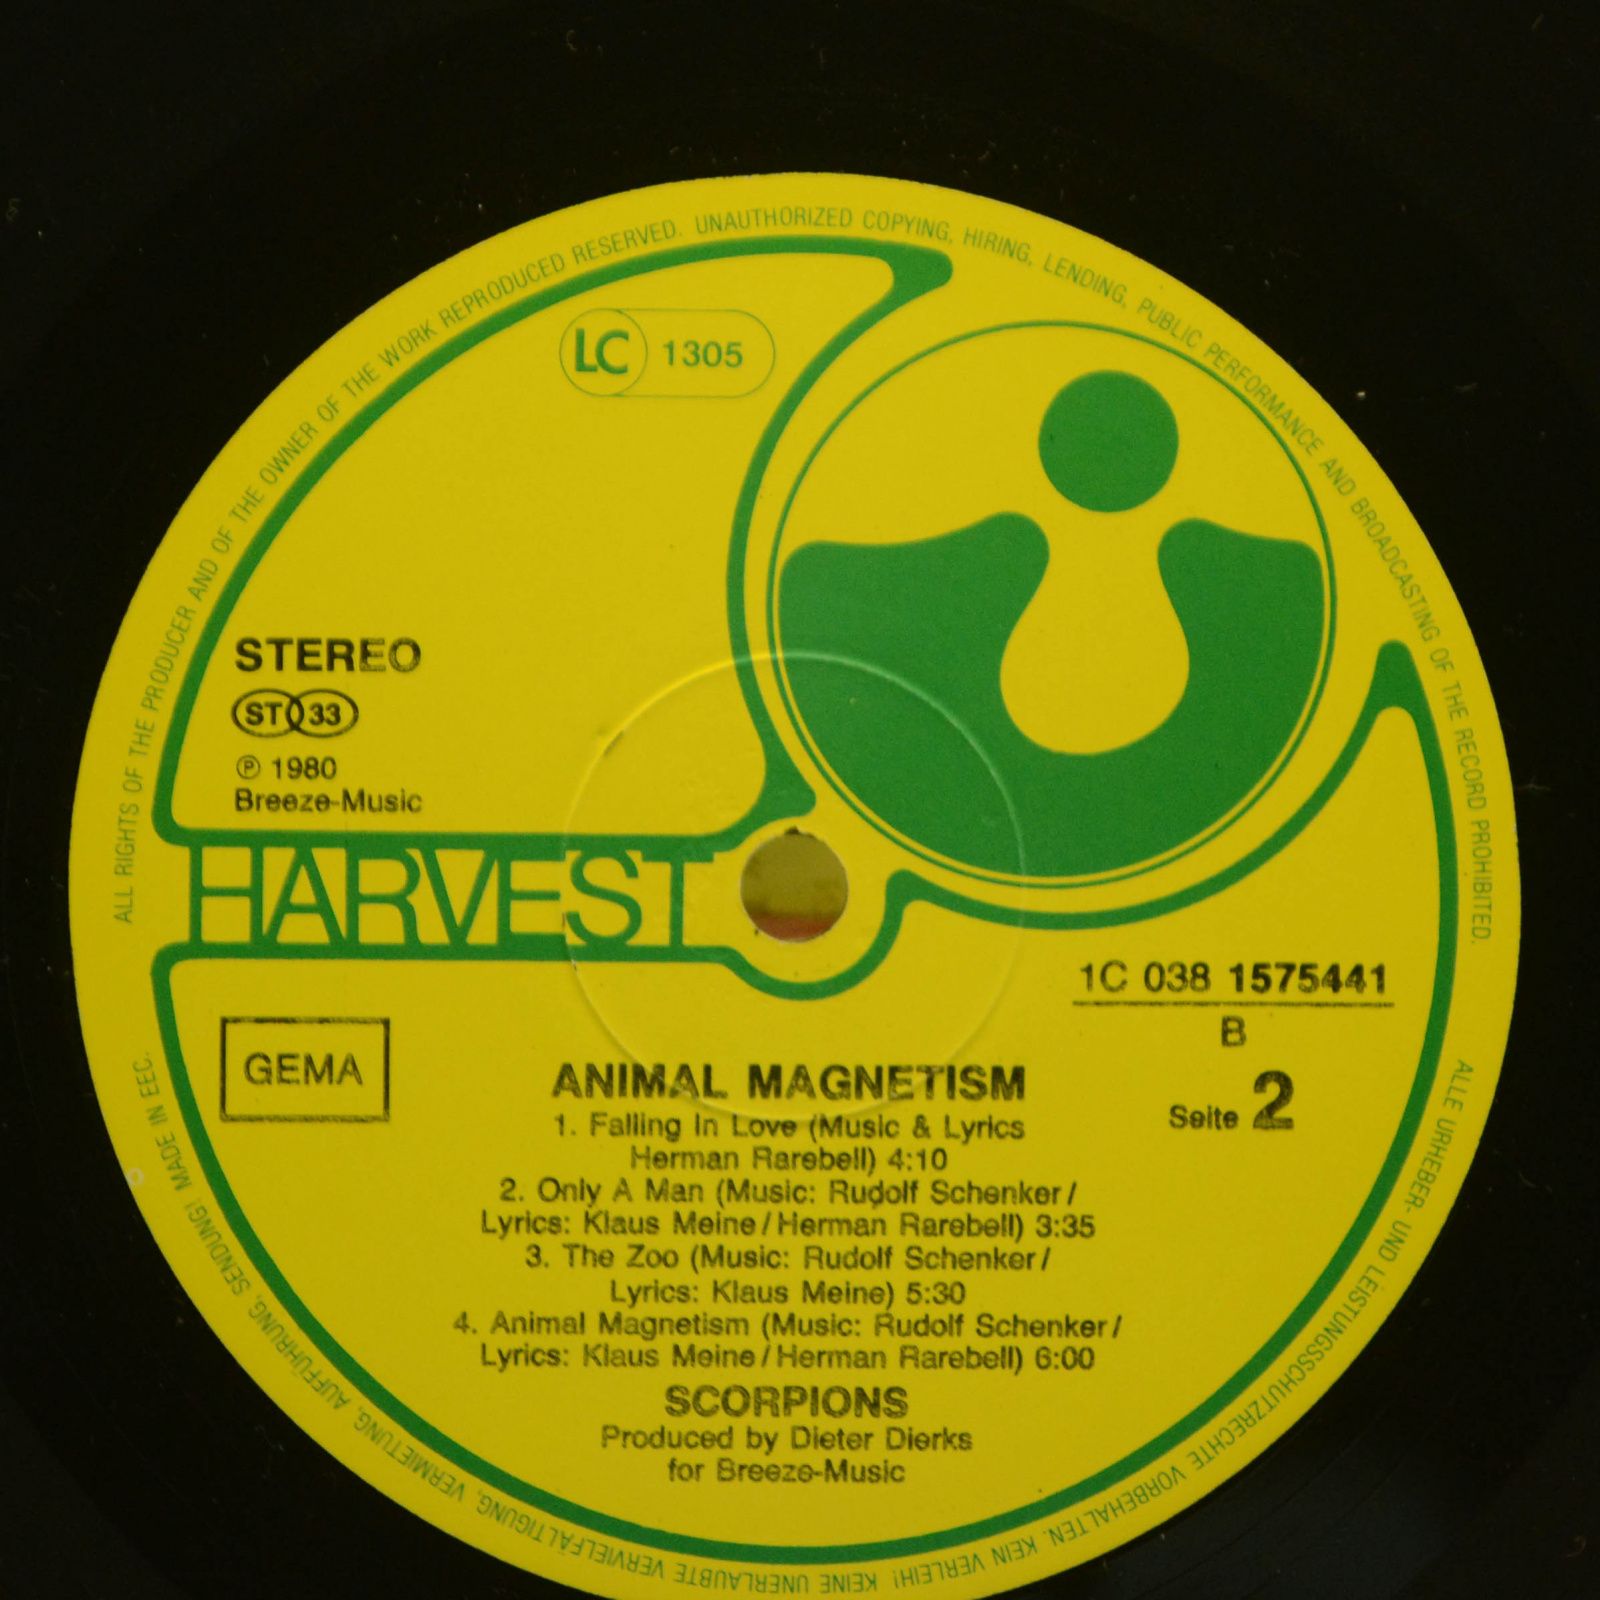 Scorpions — Animal Magnetism, 1984